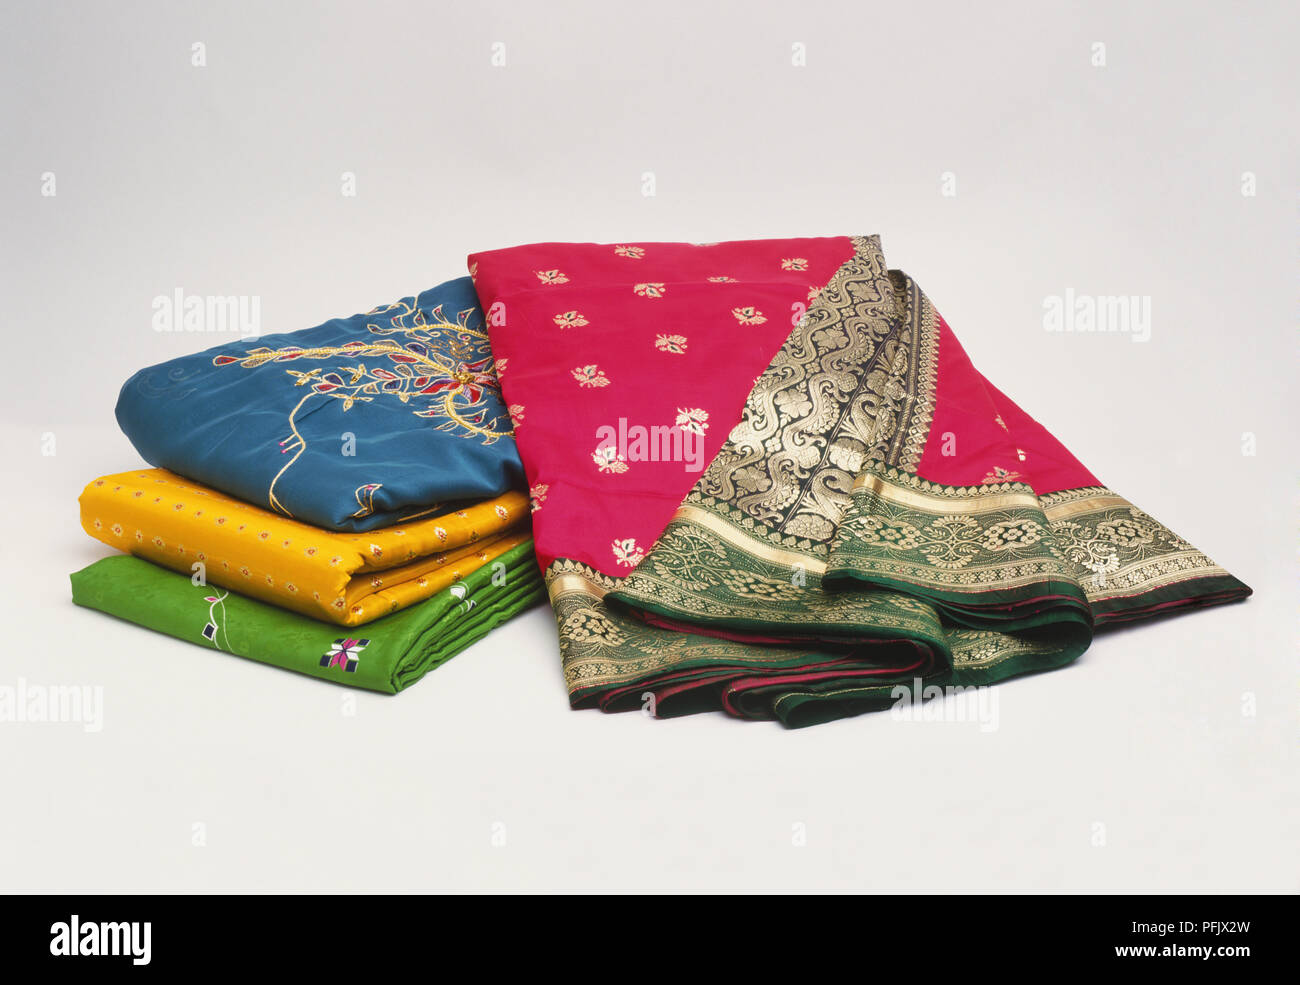 Colourful pile of folded embroidered Asian fabrics Stock Photo